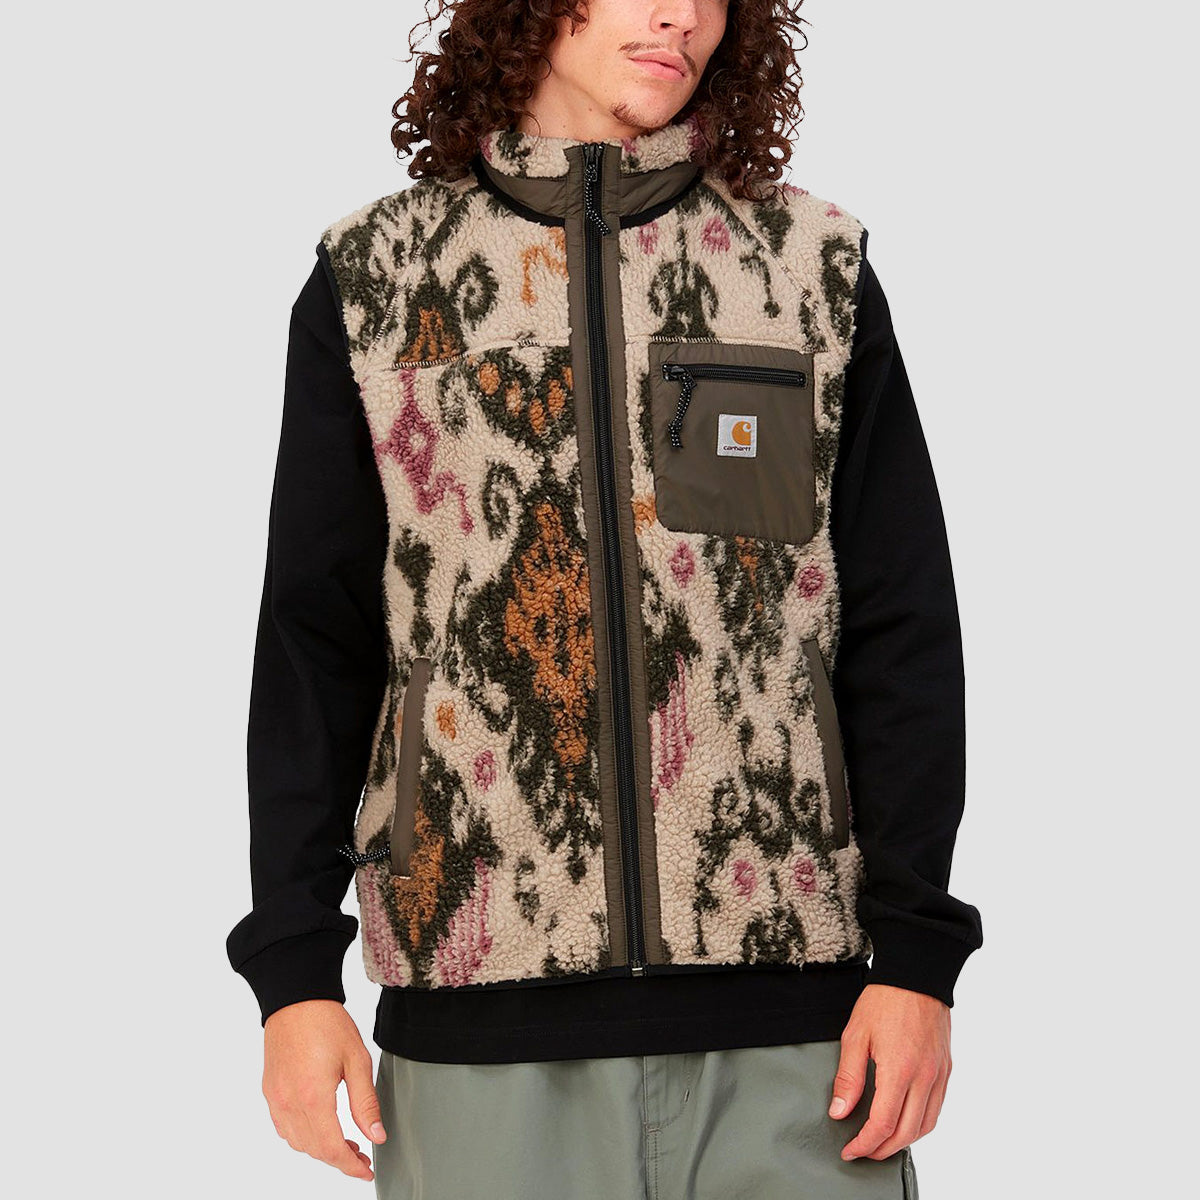 Carhartt WIP Prentis Vest Liner Jacket Baru Jacquard/Wall/Cypress